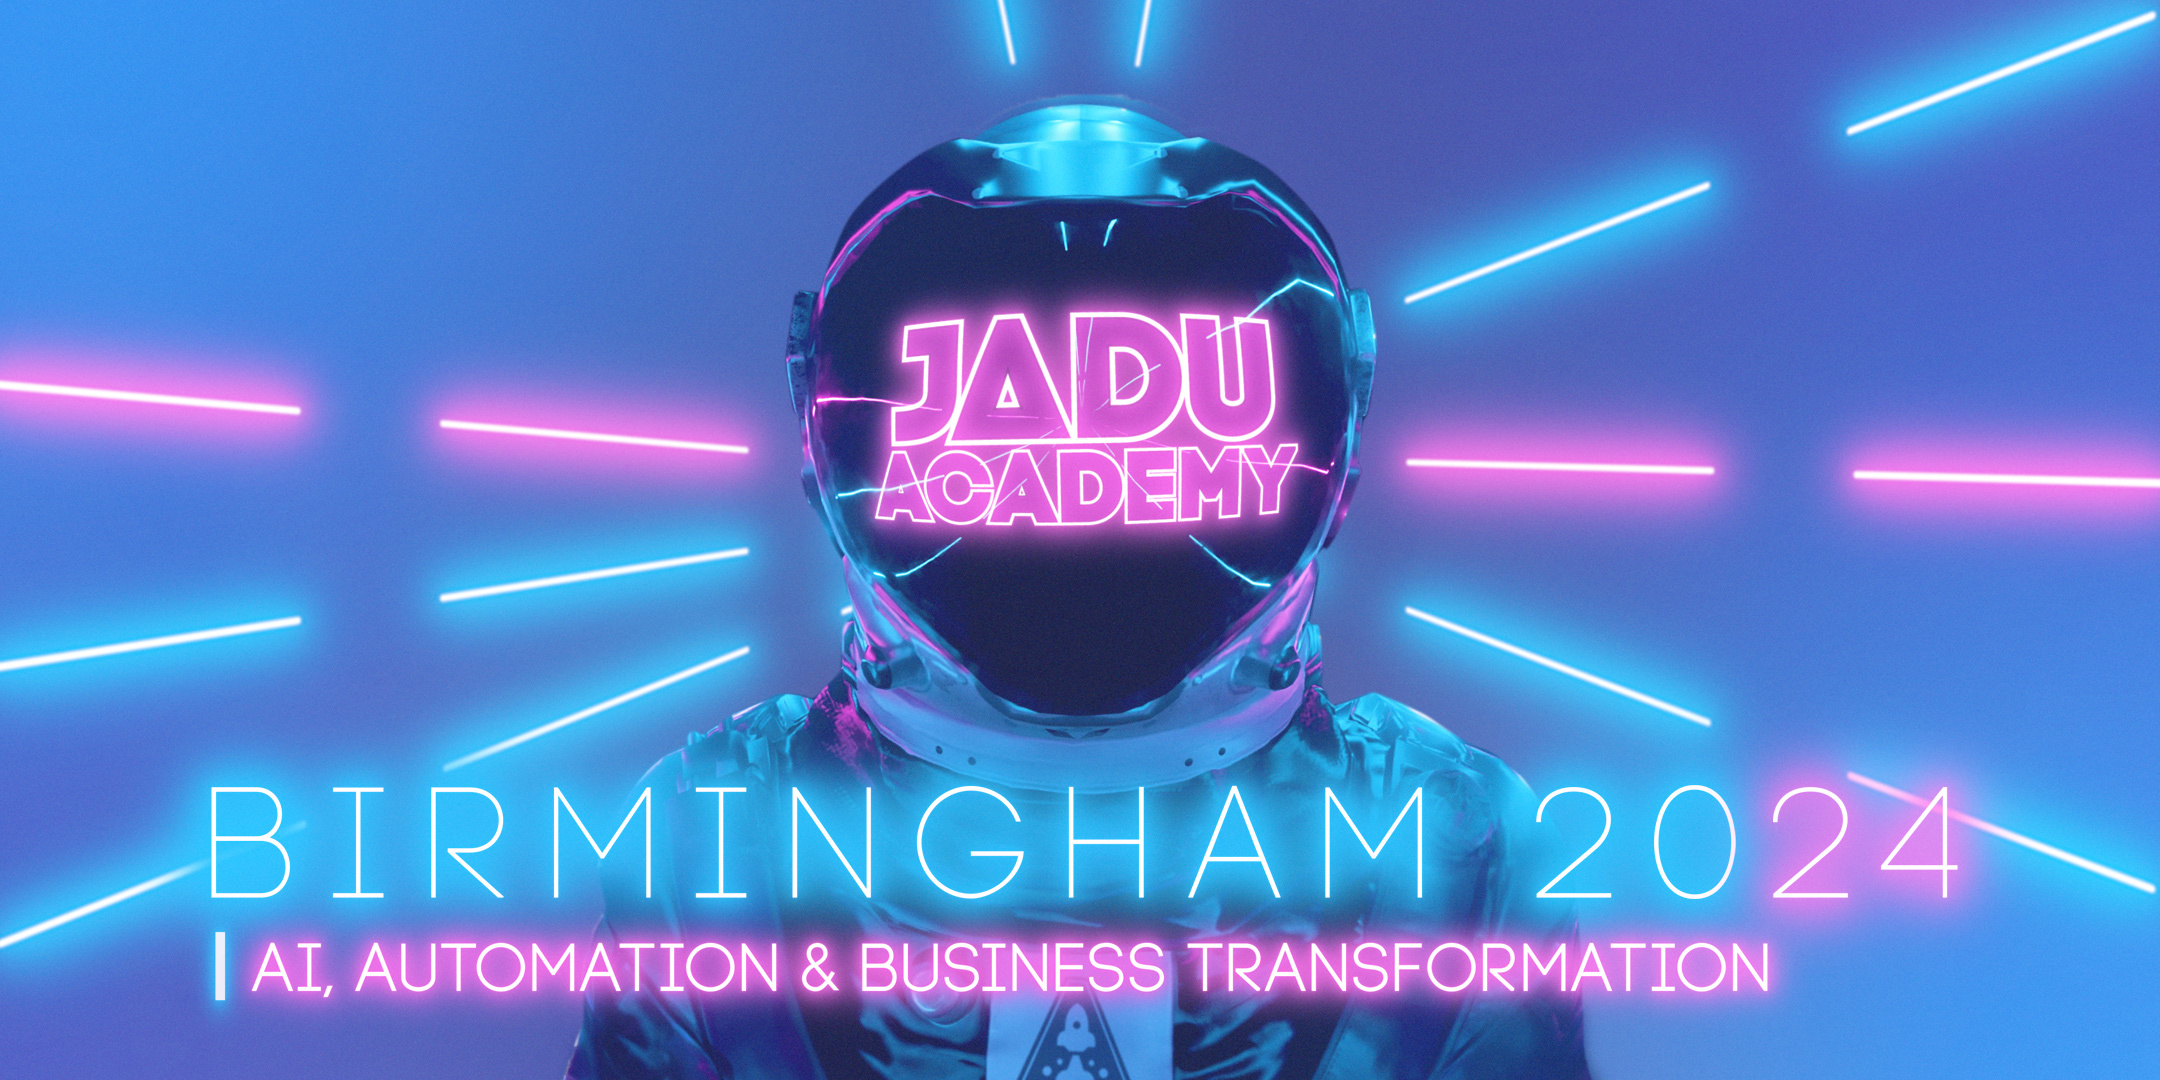 Jadu Academy logo with pink and blue lights